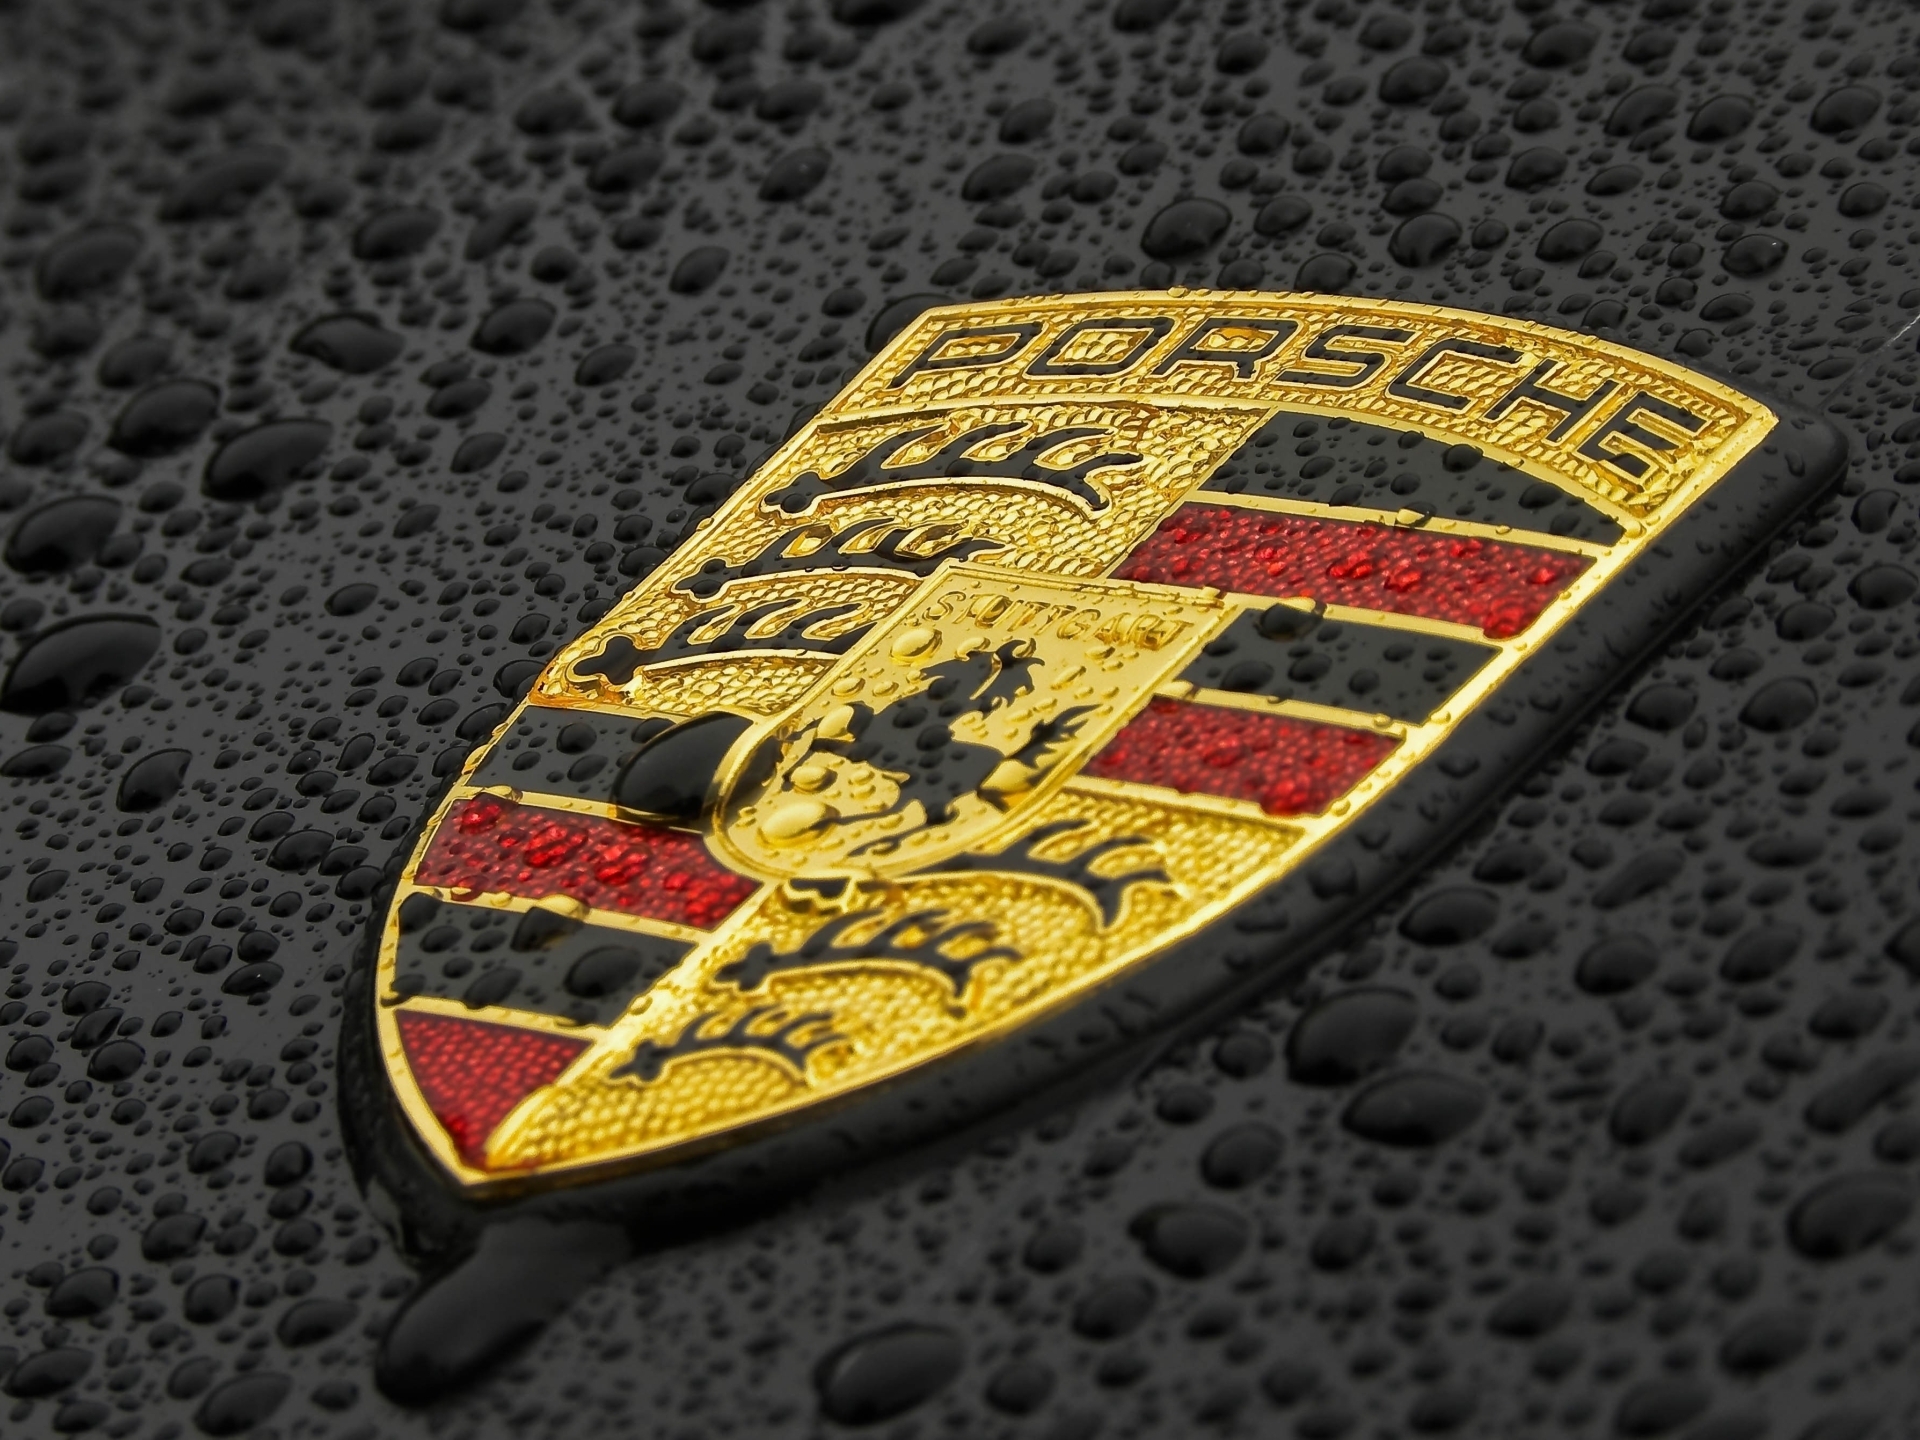 Porsche Wallpaper Widescreen - image #153